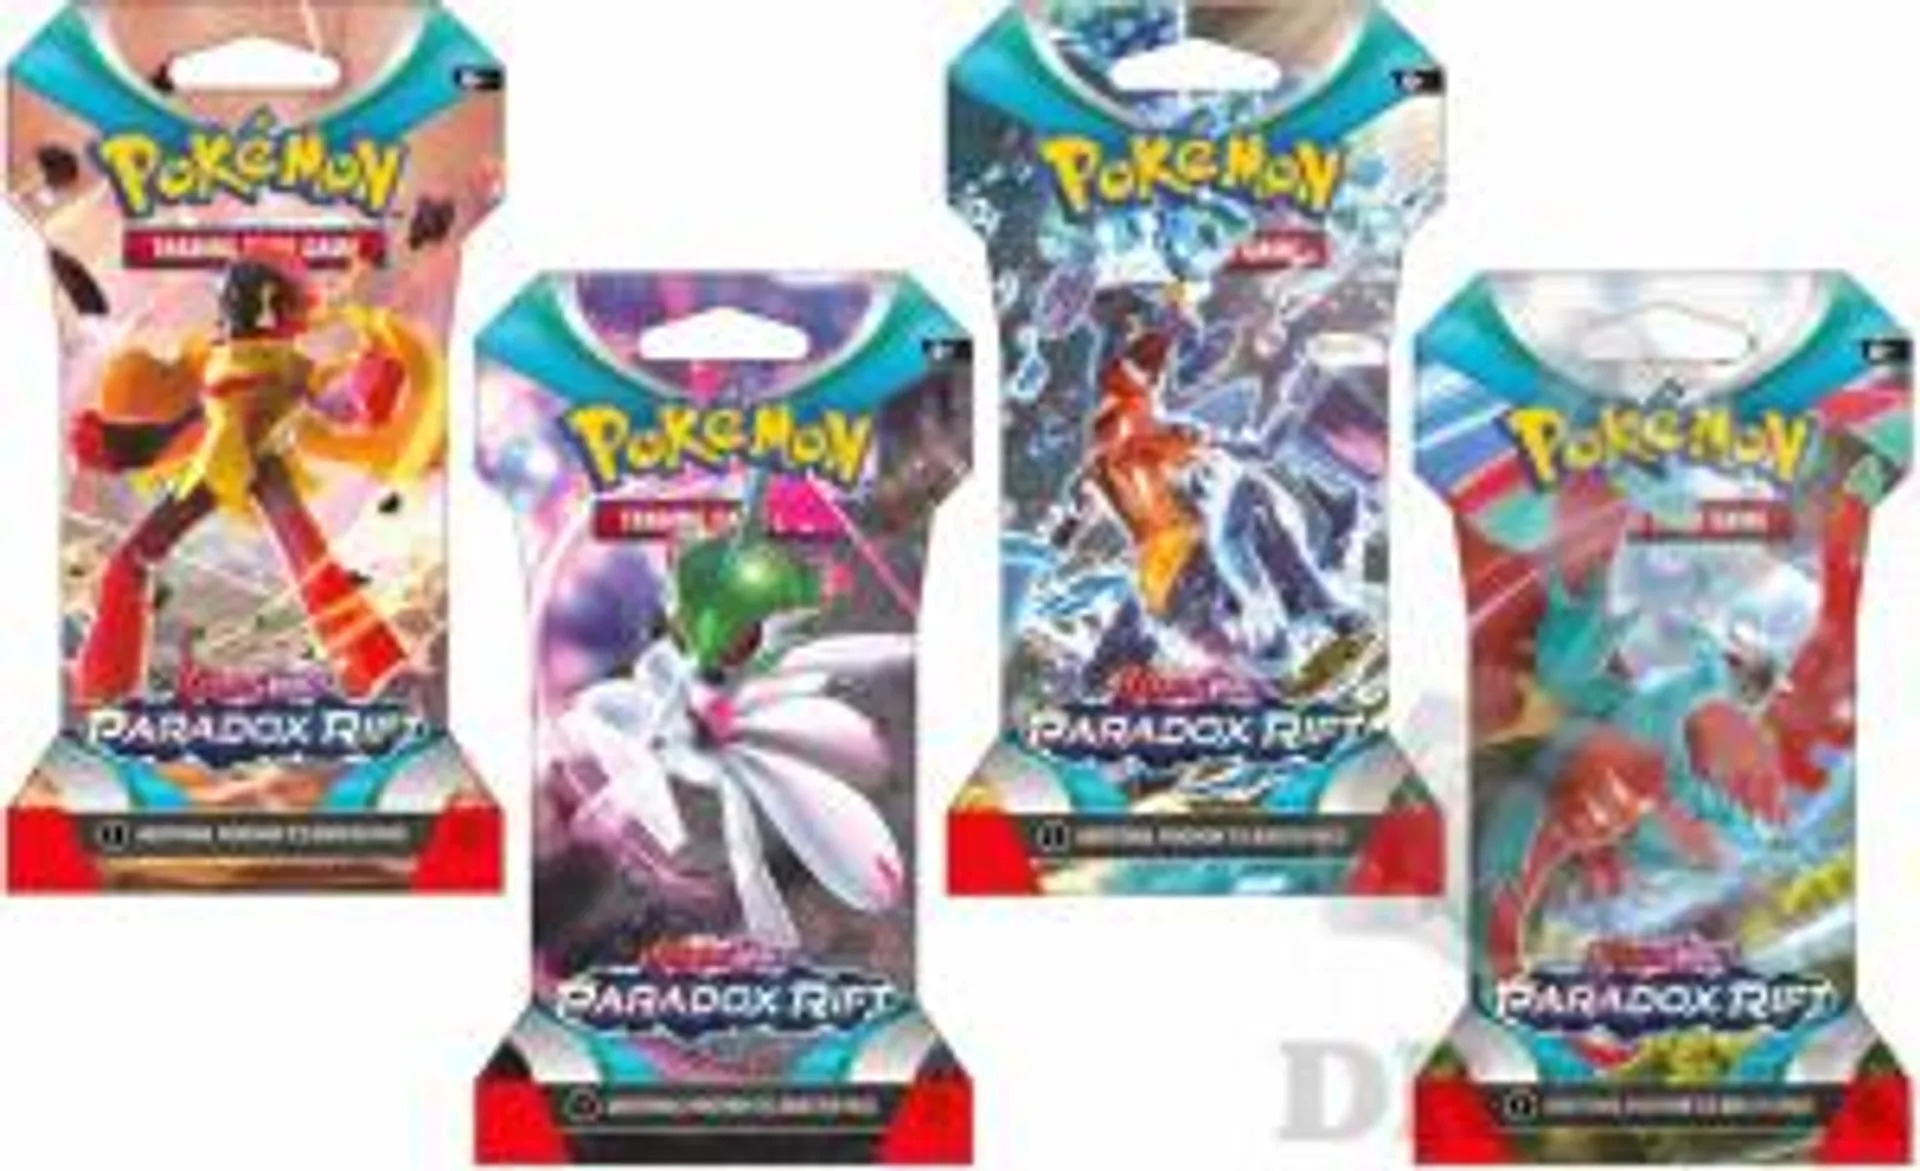 Pokémon Tcg: Sv04 Paradox Rift - Sleeved Booster Pack